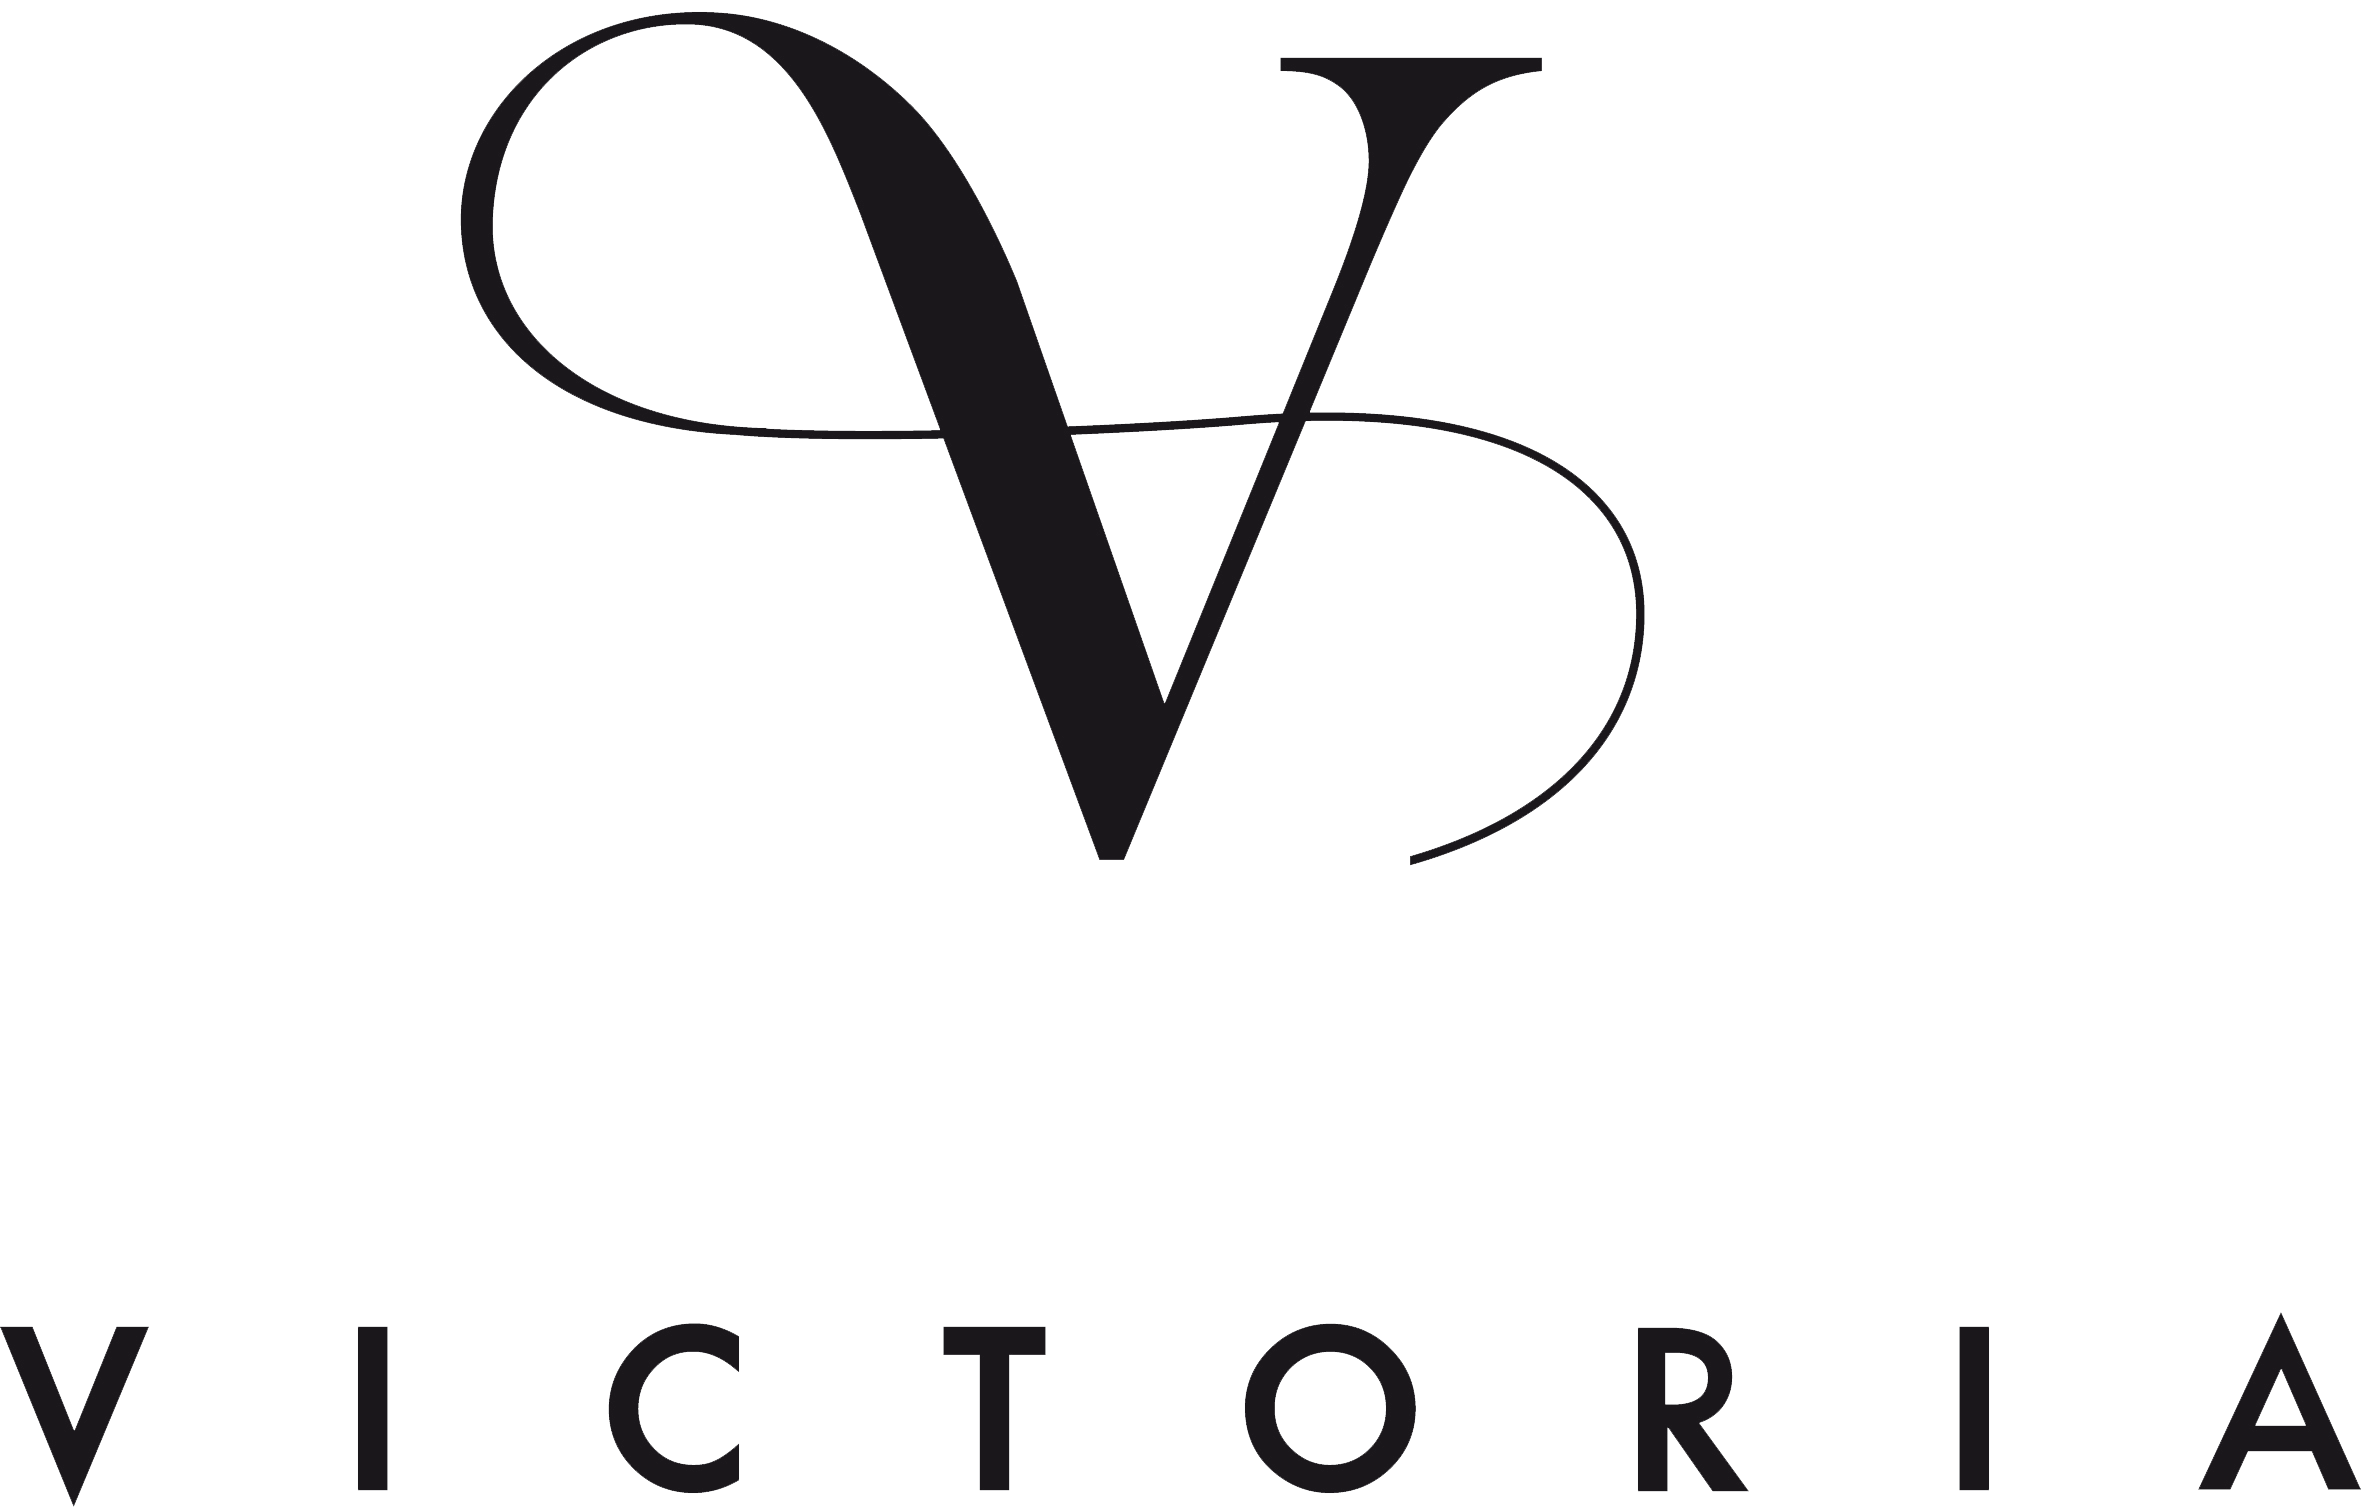 Victoria Logo - Victoria-logo- Elveebeauty